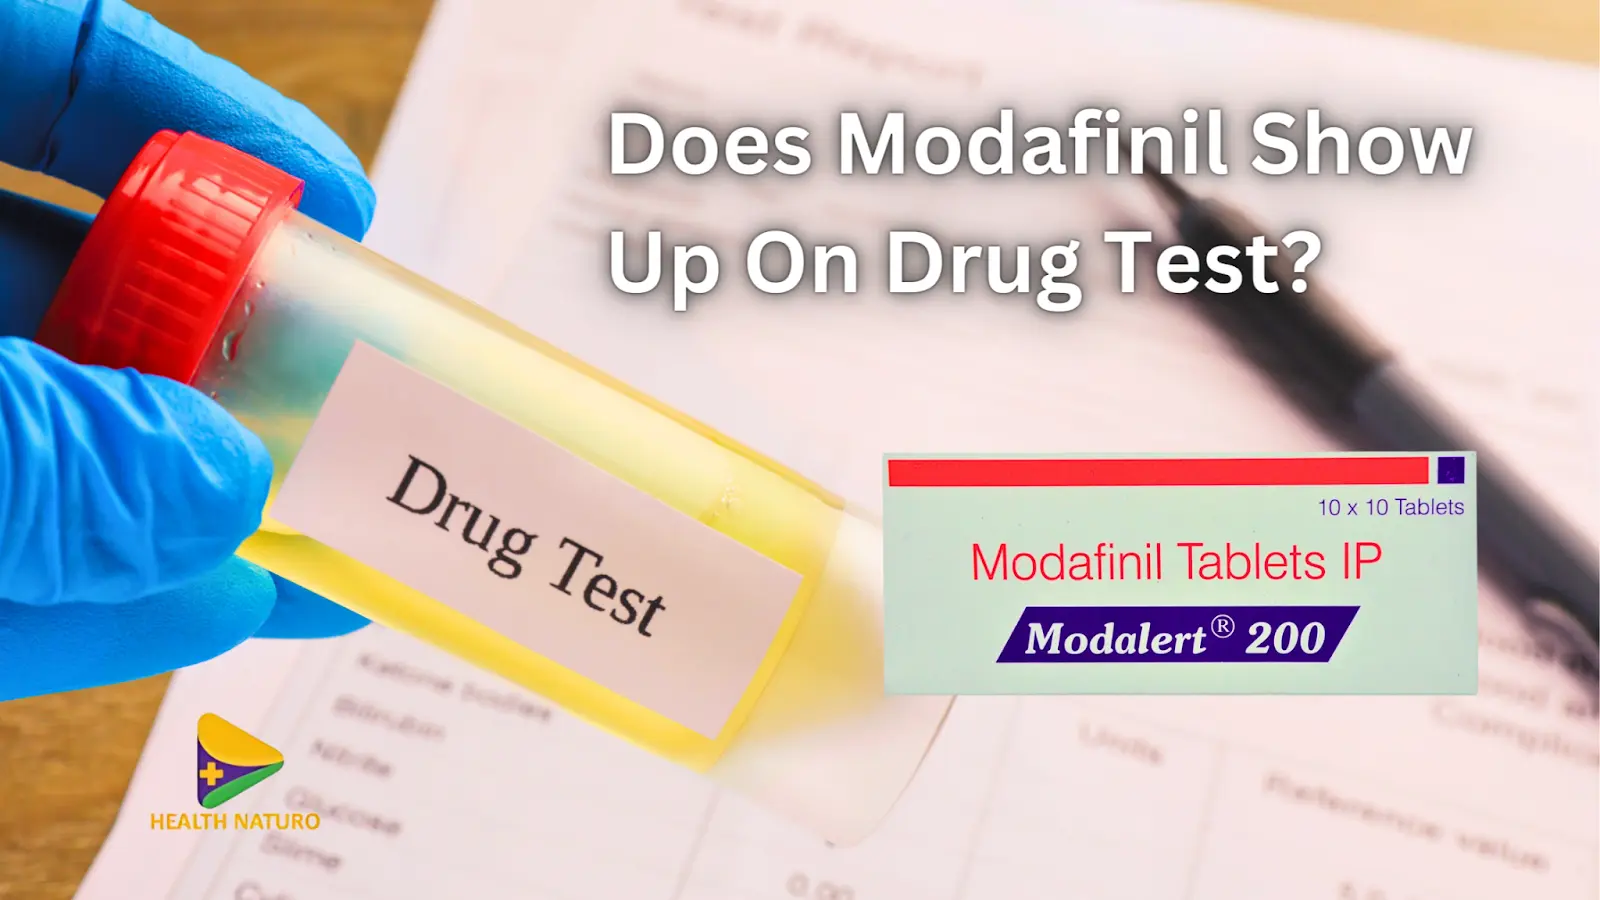 Does Modafinil Show Up On Drug Test?